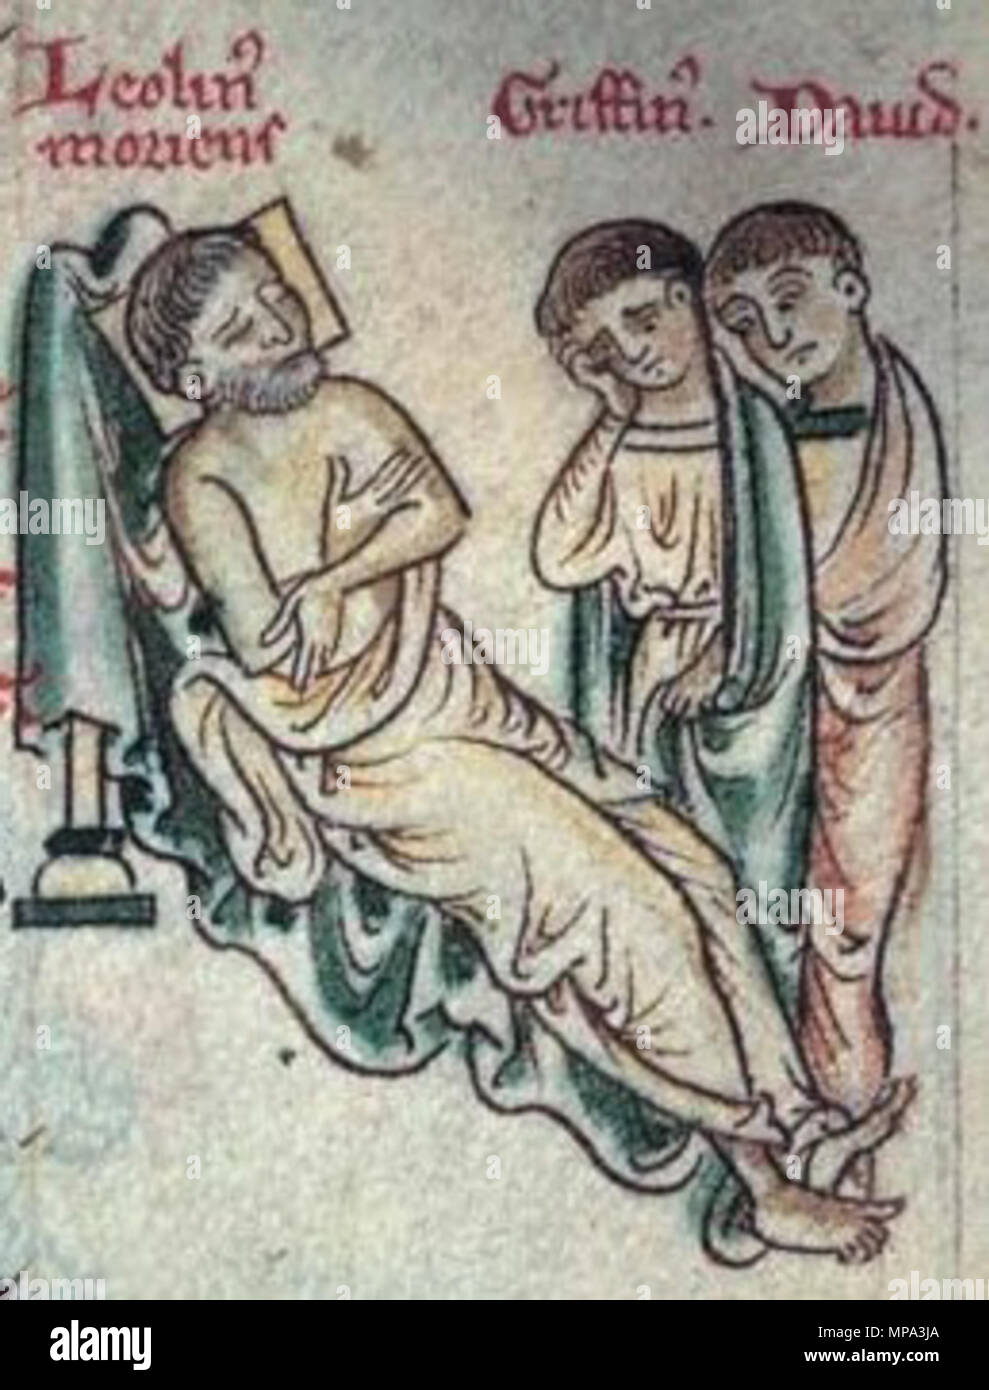 . Manuscript drawing showing Llywelyn the Great with his sons Gruffydd and Dafydd. By Matthew Paris, in or before 1259. circa 1259. User:Lampman 867 Marwolaeth Llywelyn Fawr Stock Photo